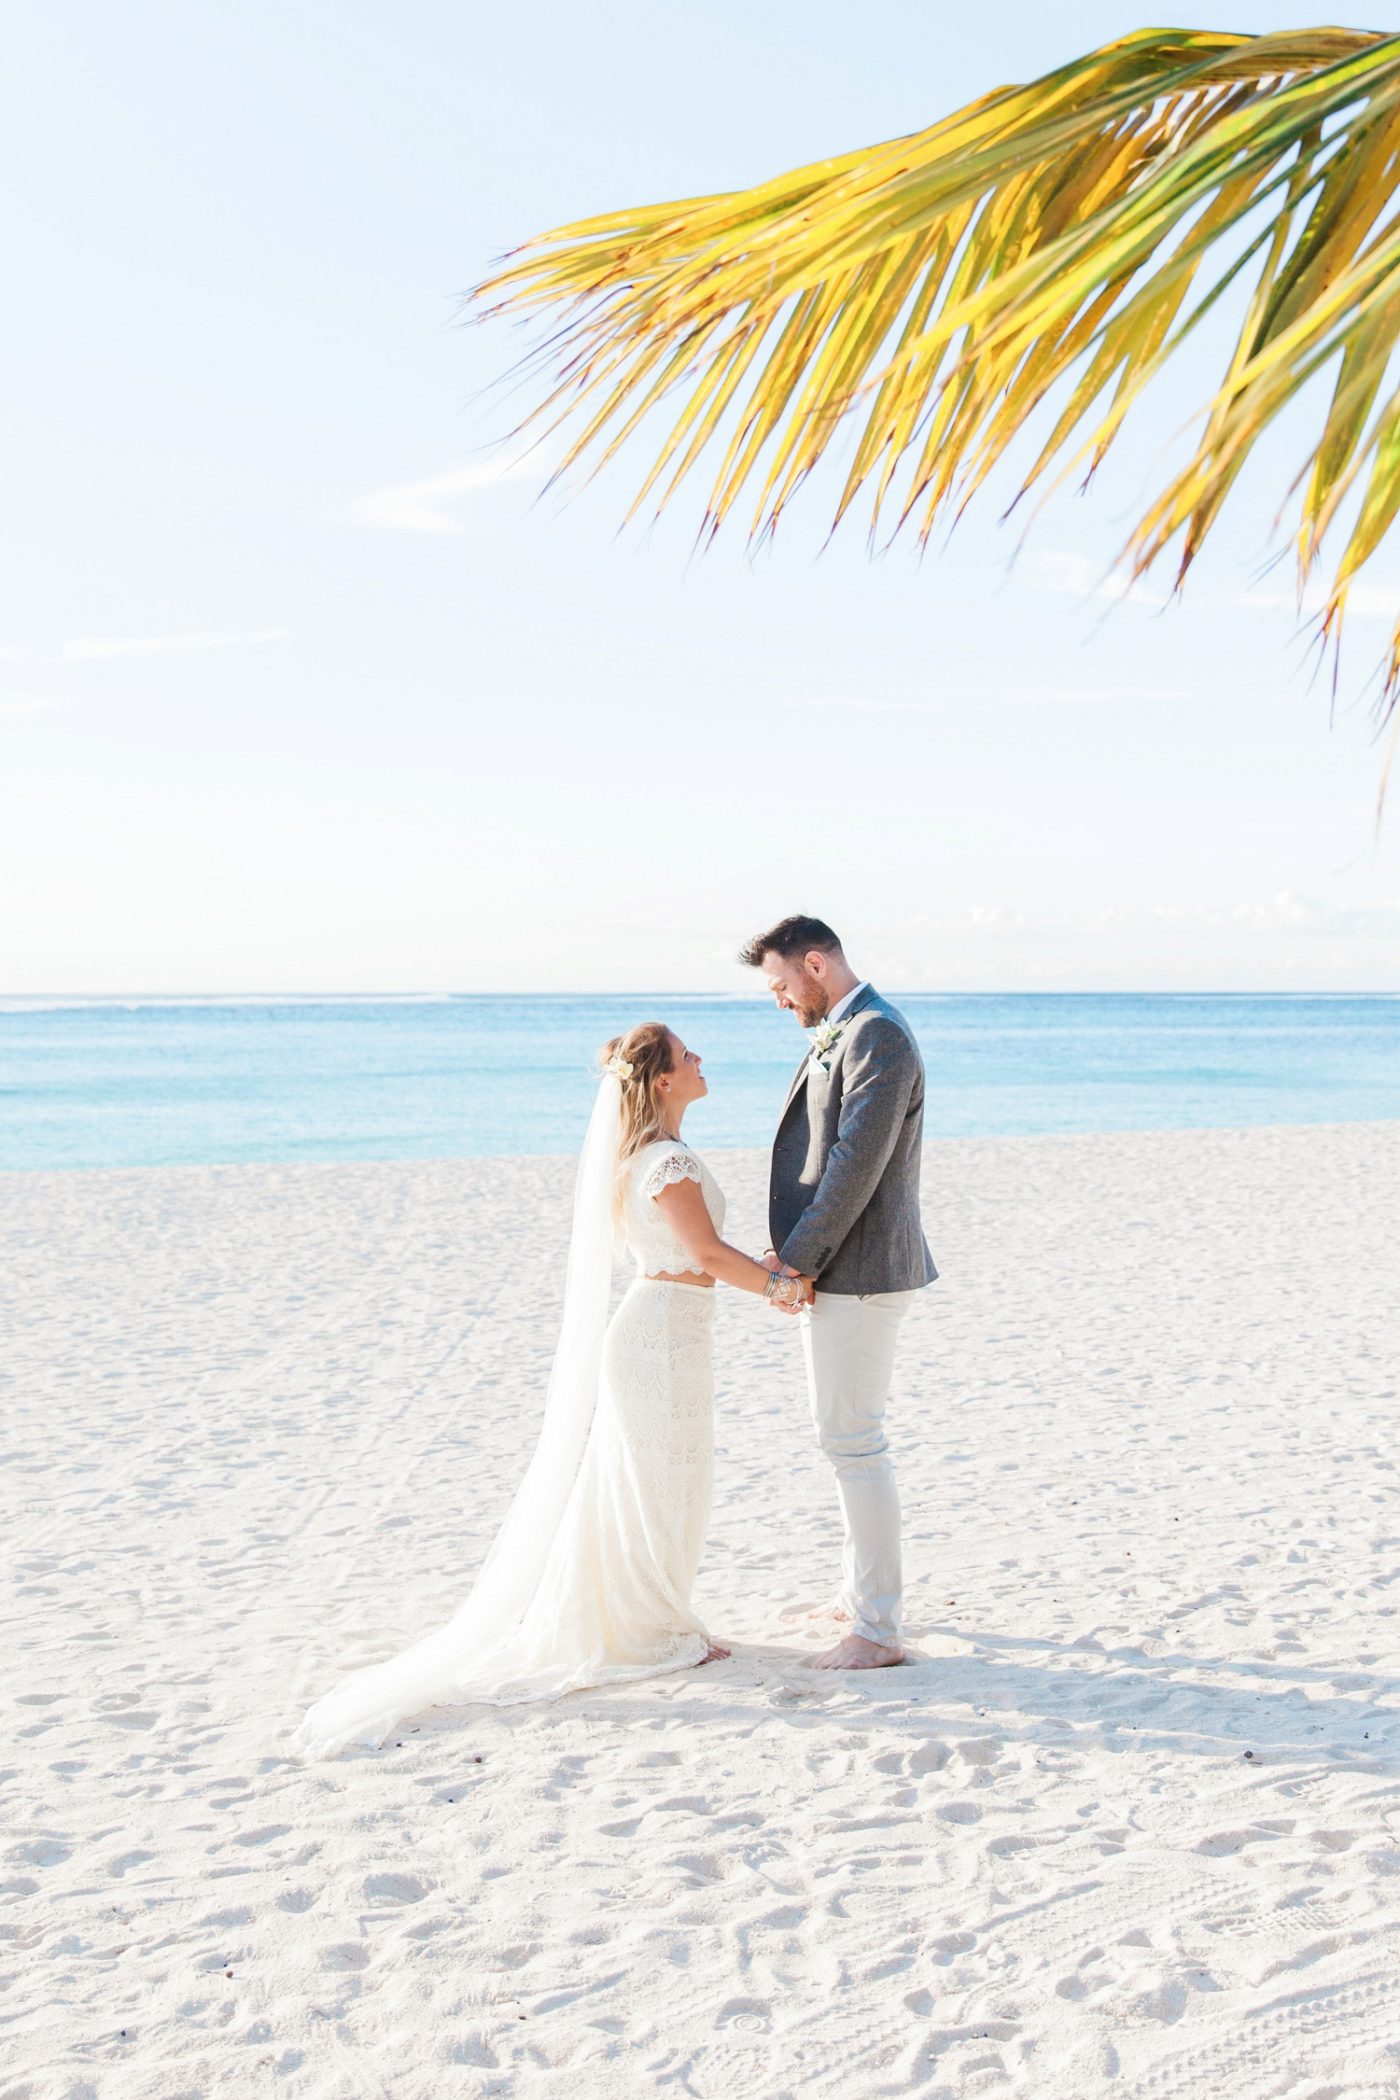 Mauritius wedding photographer testimonial